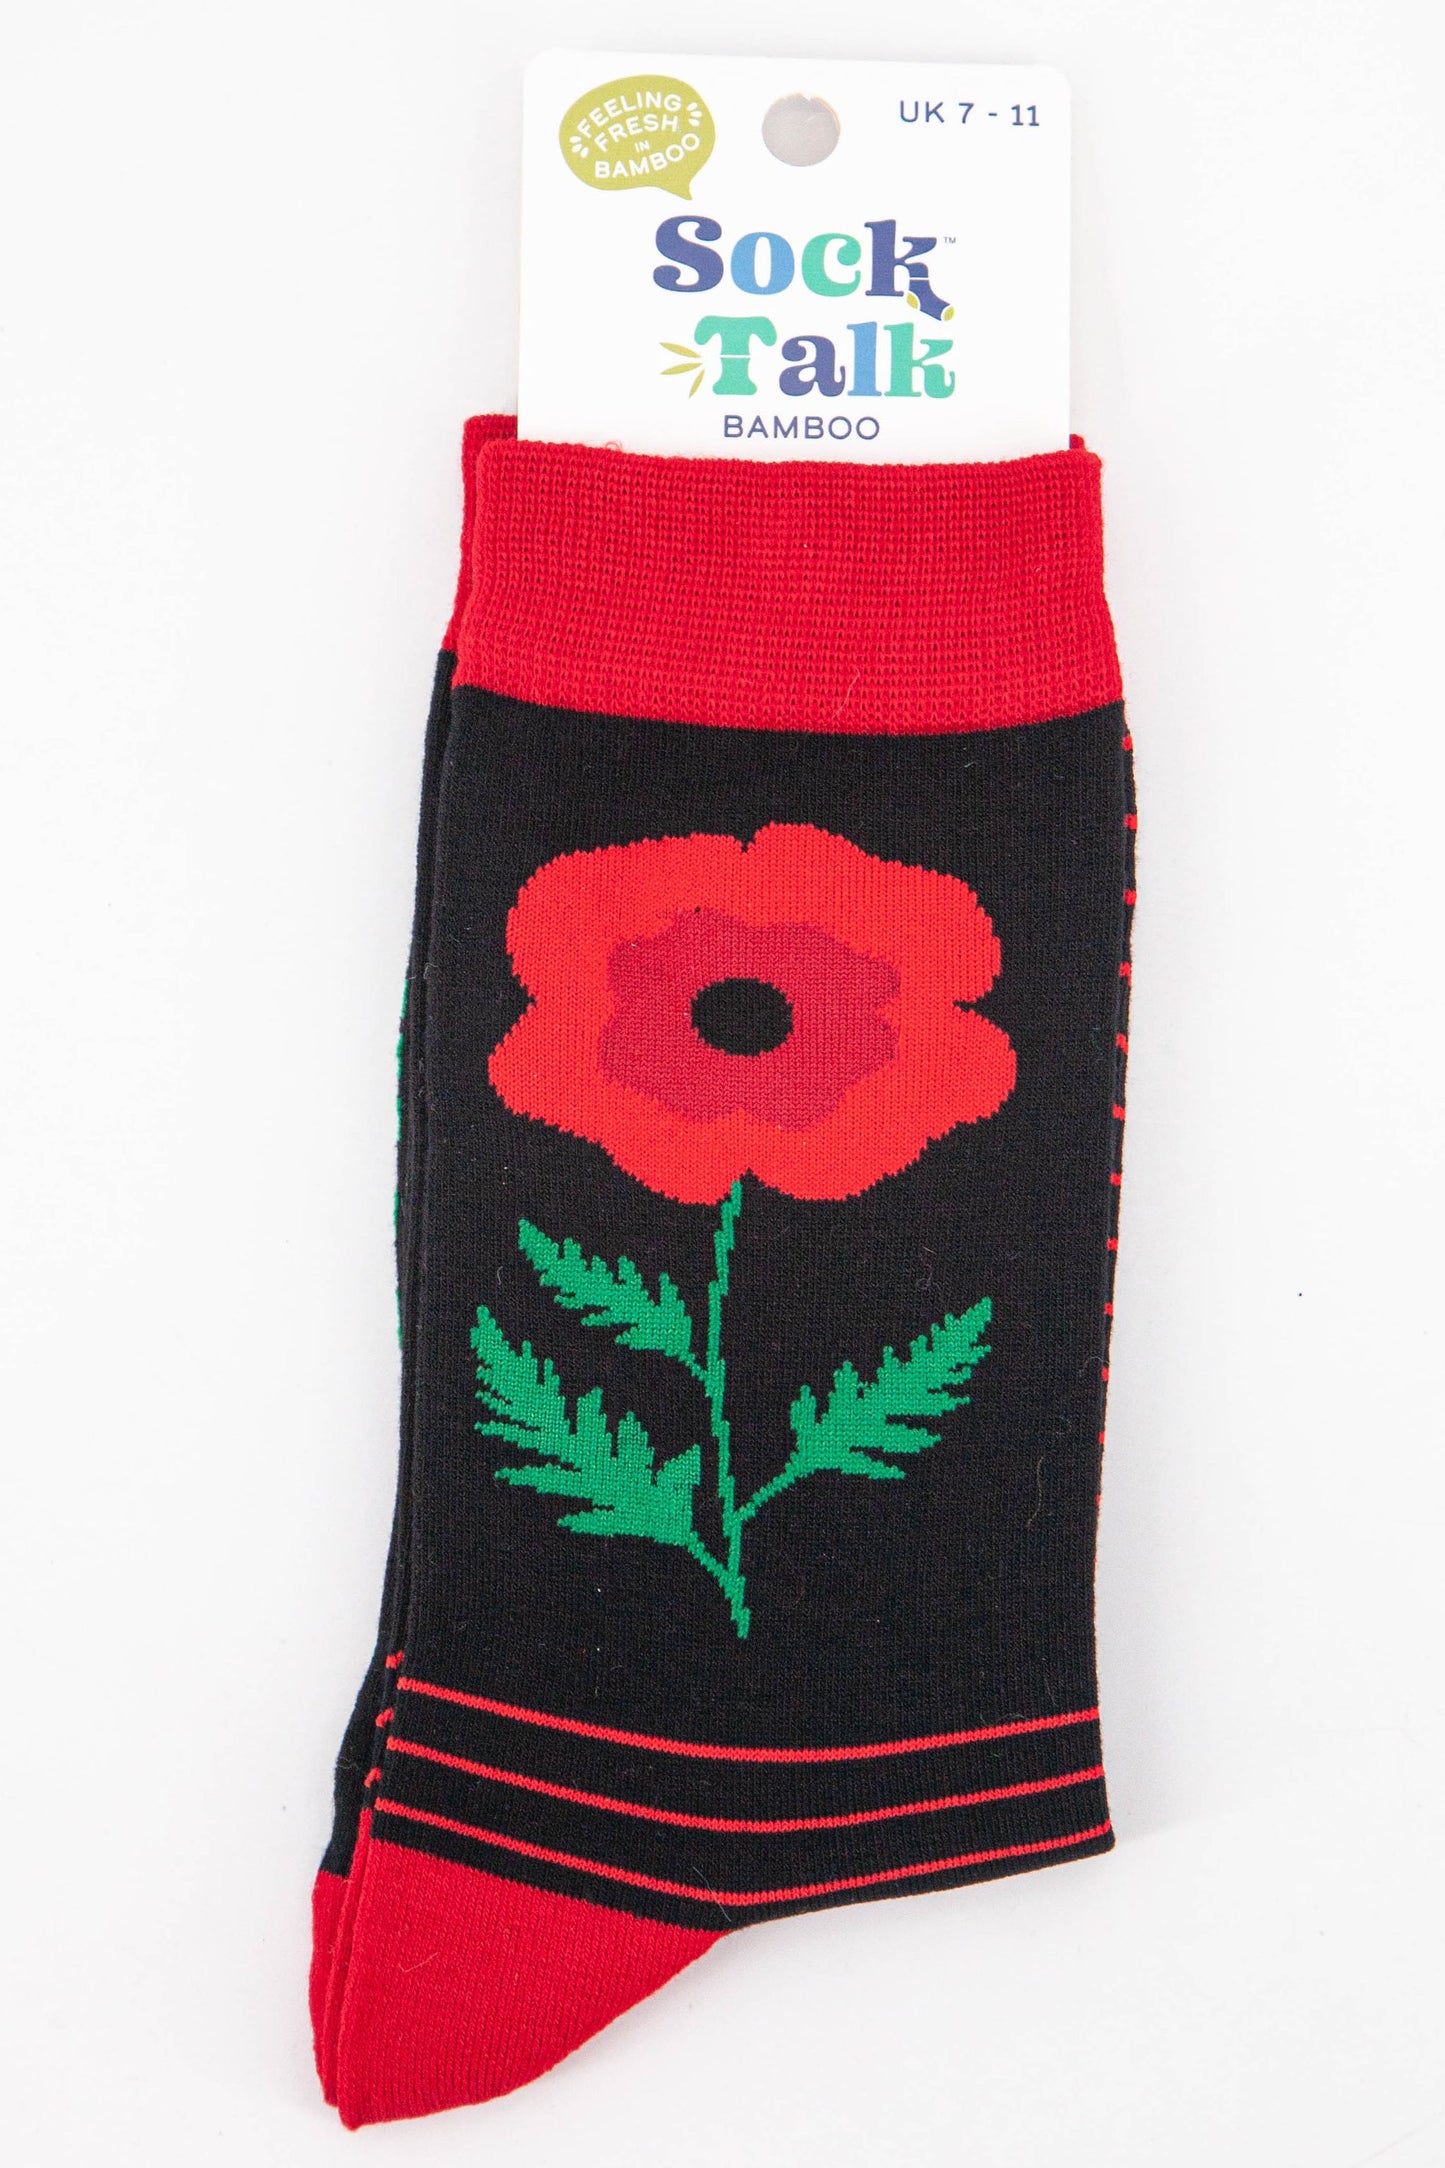 mens bamboo poppy socks uk size 7-11